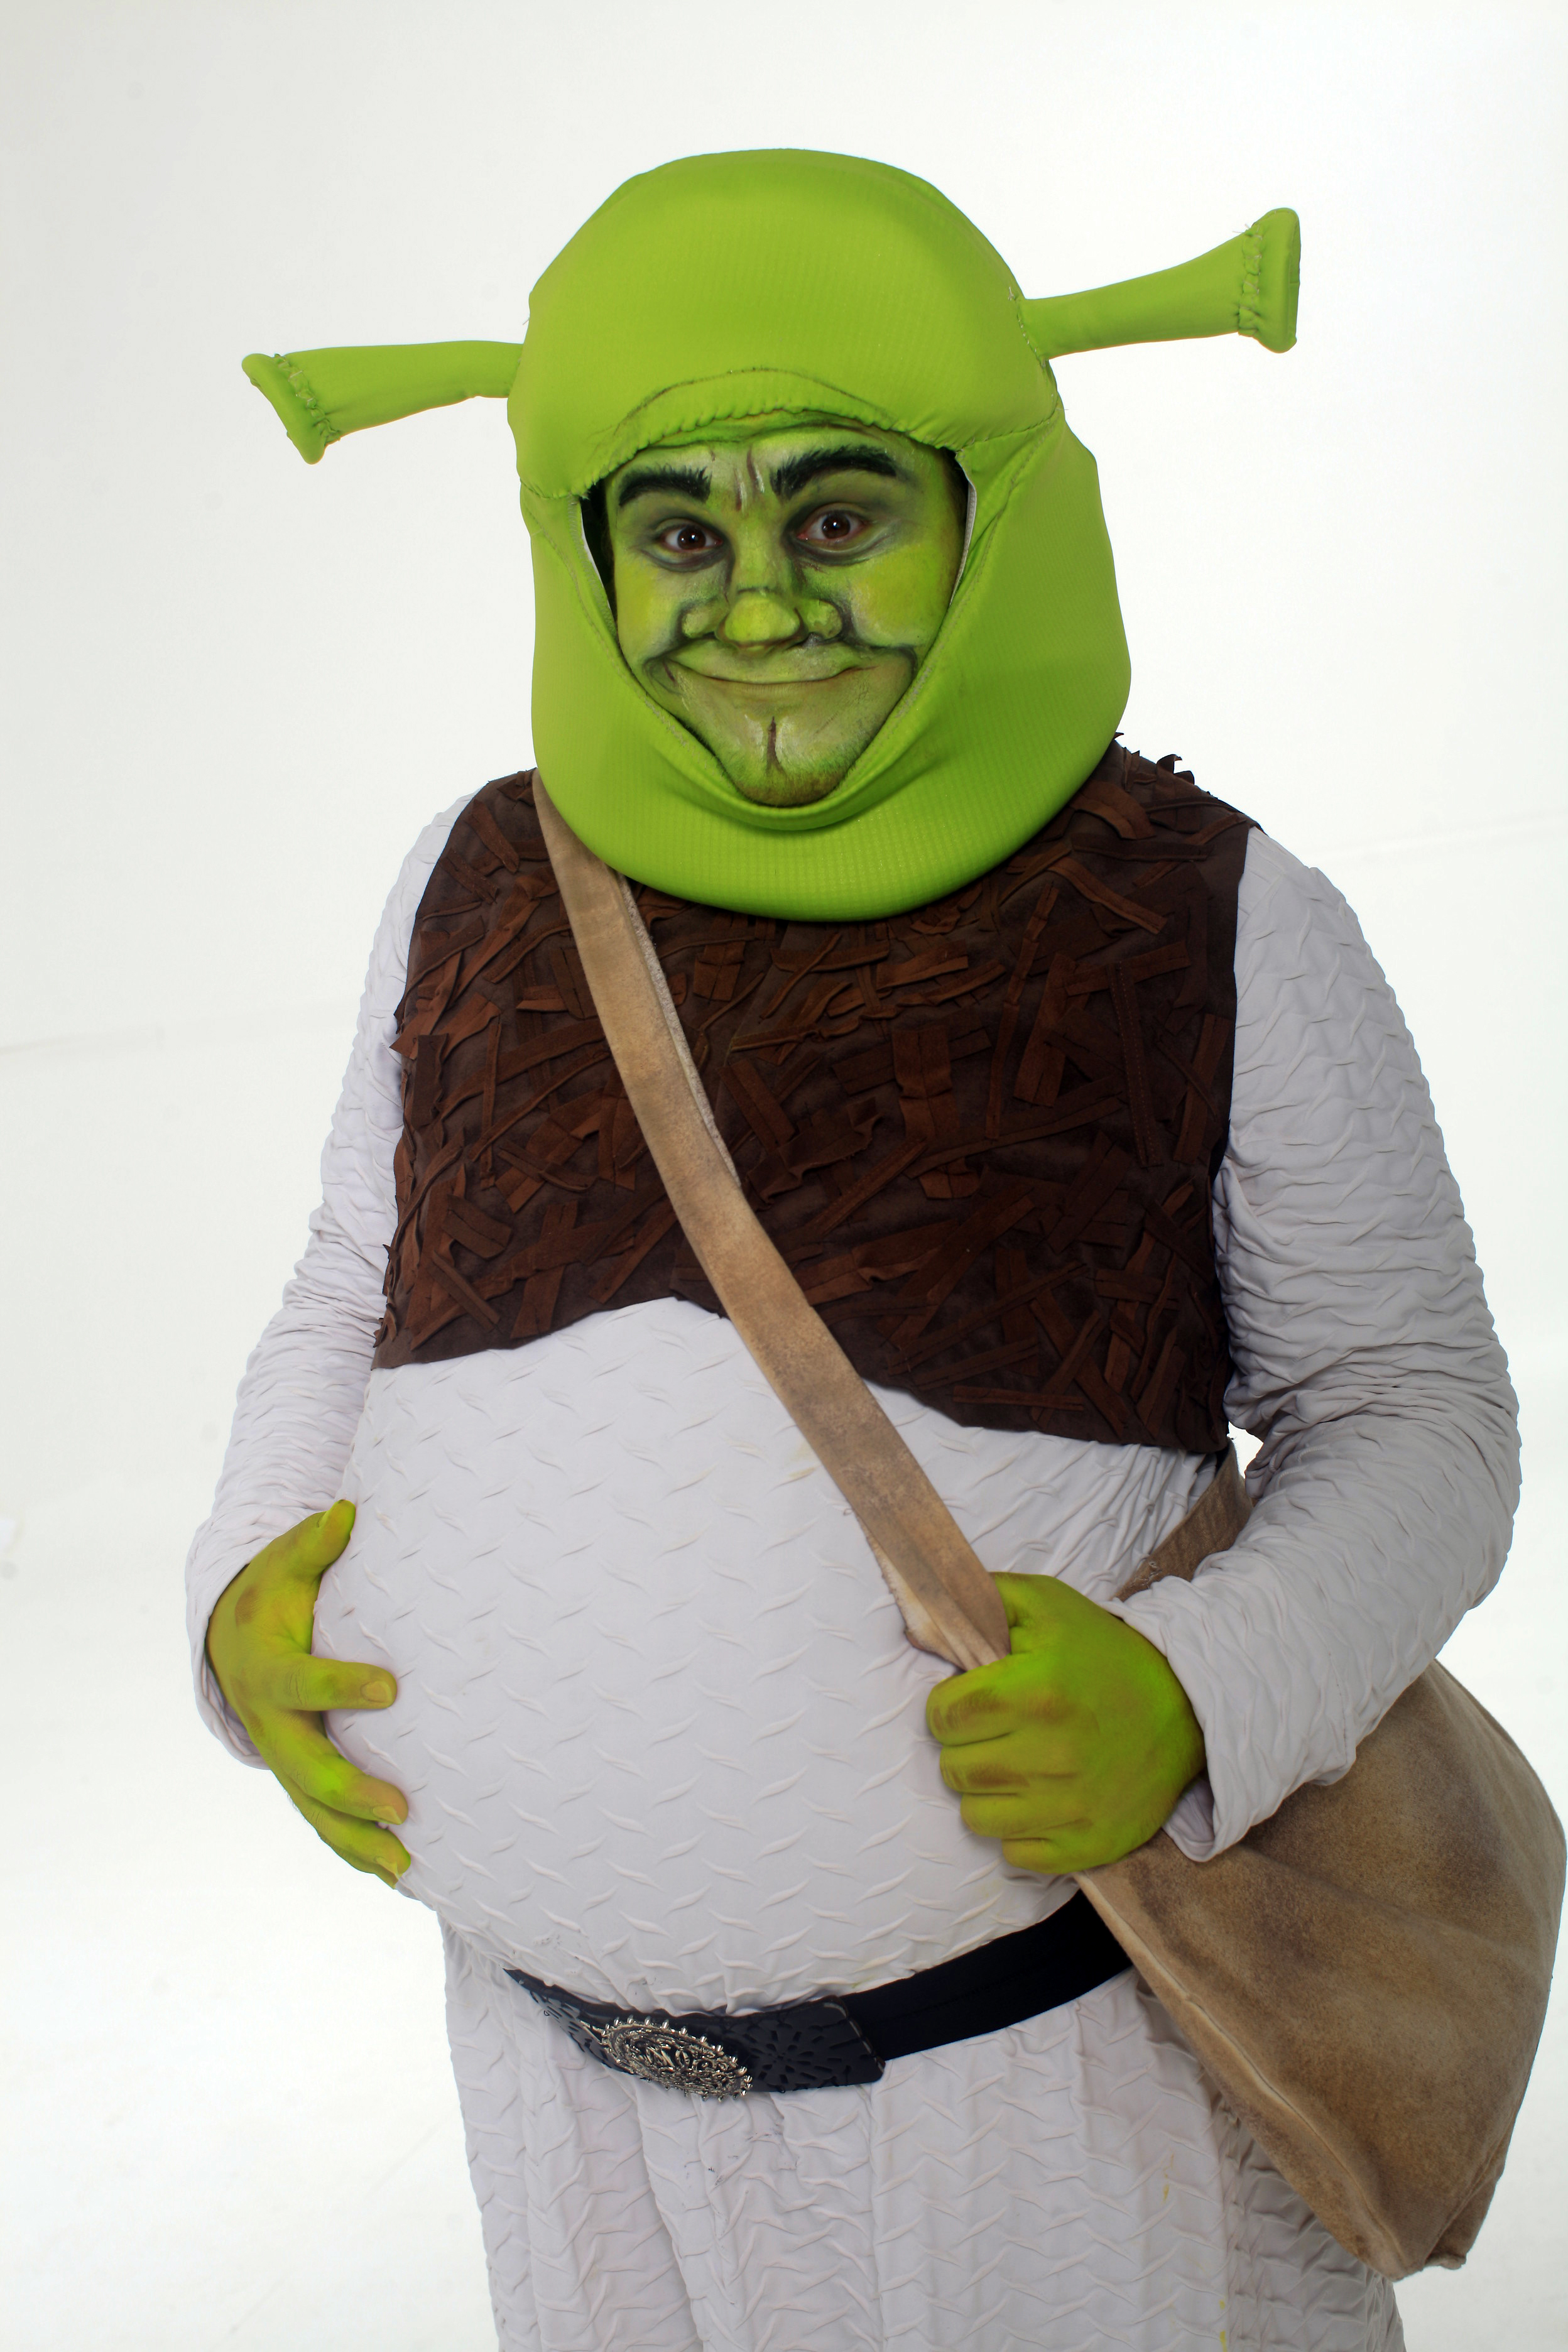 Shrek The Musical Characters List